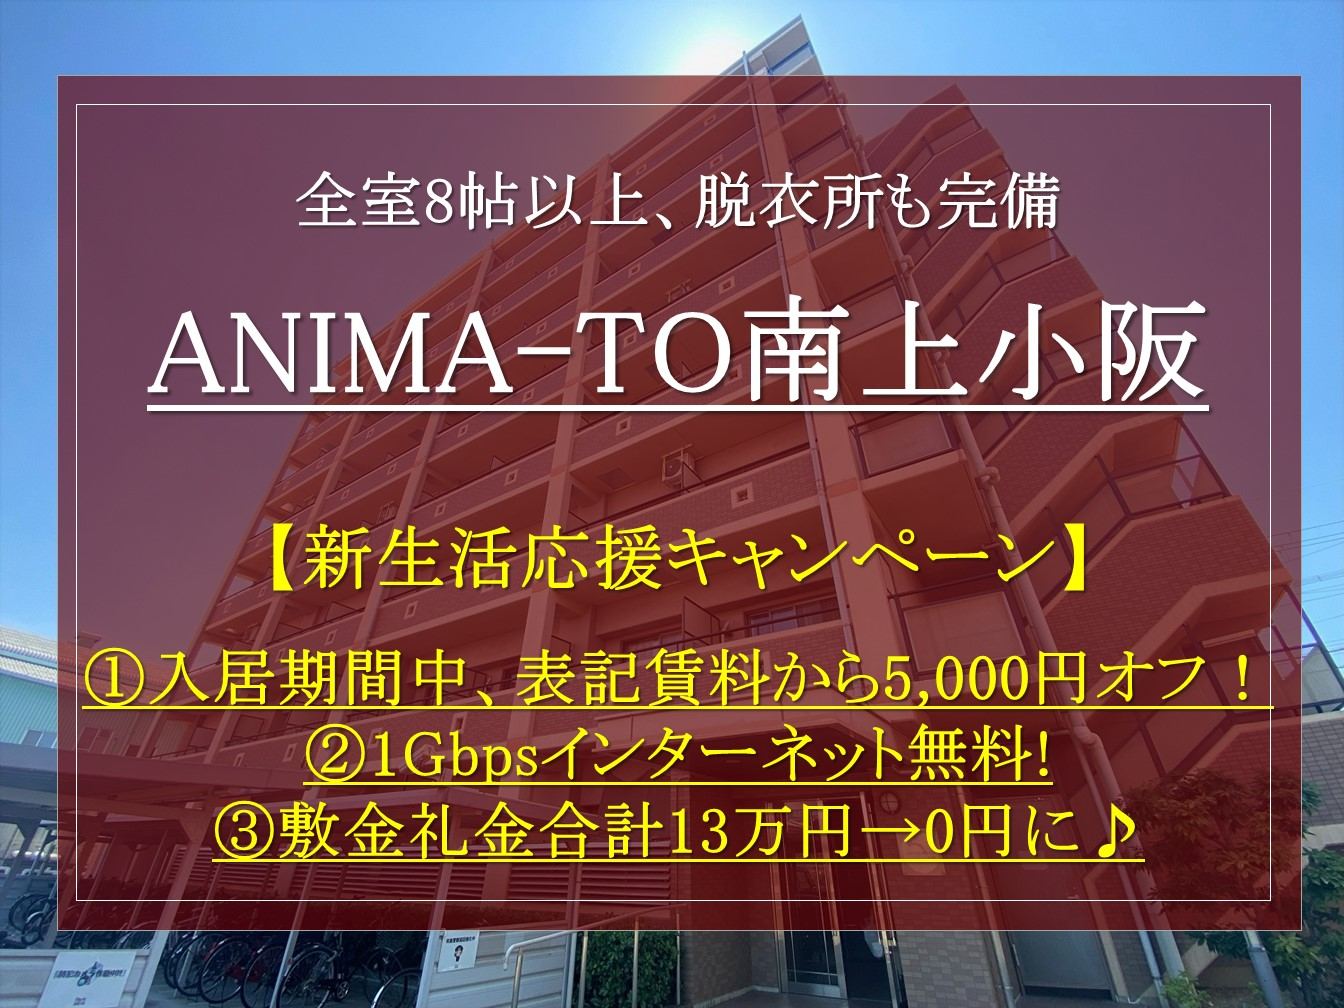 【ANIMA-TO南上小阪】在校生向け新生活応援キャンペーンのご案内